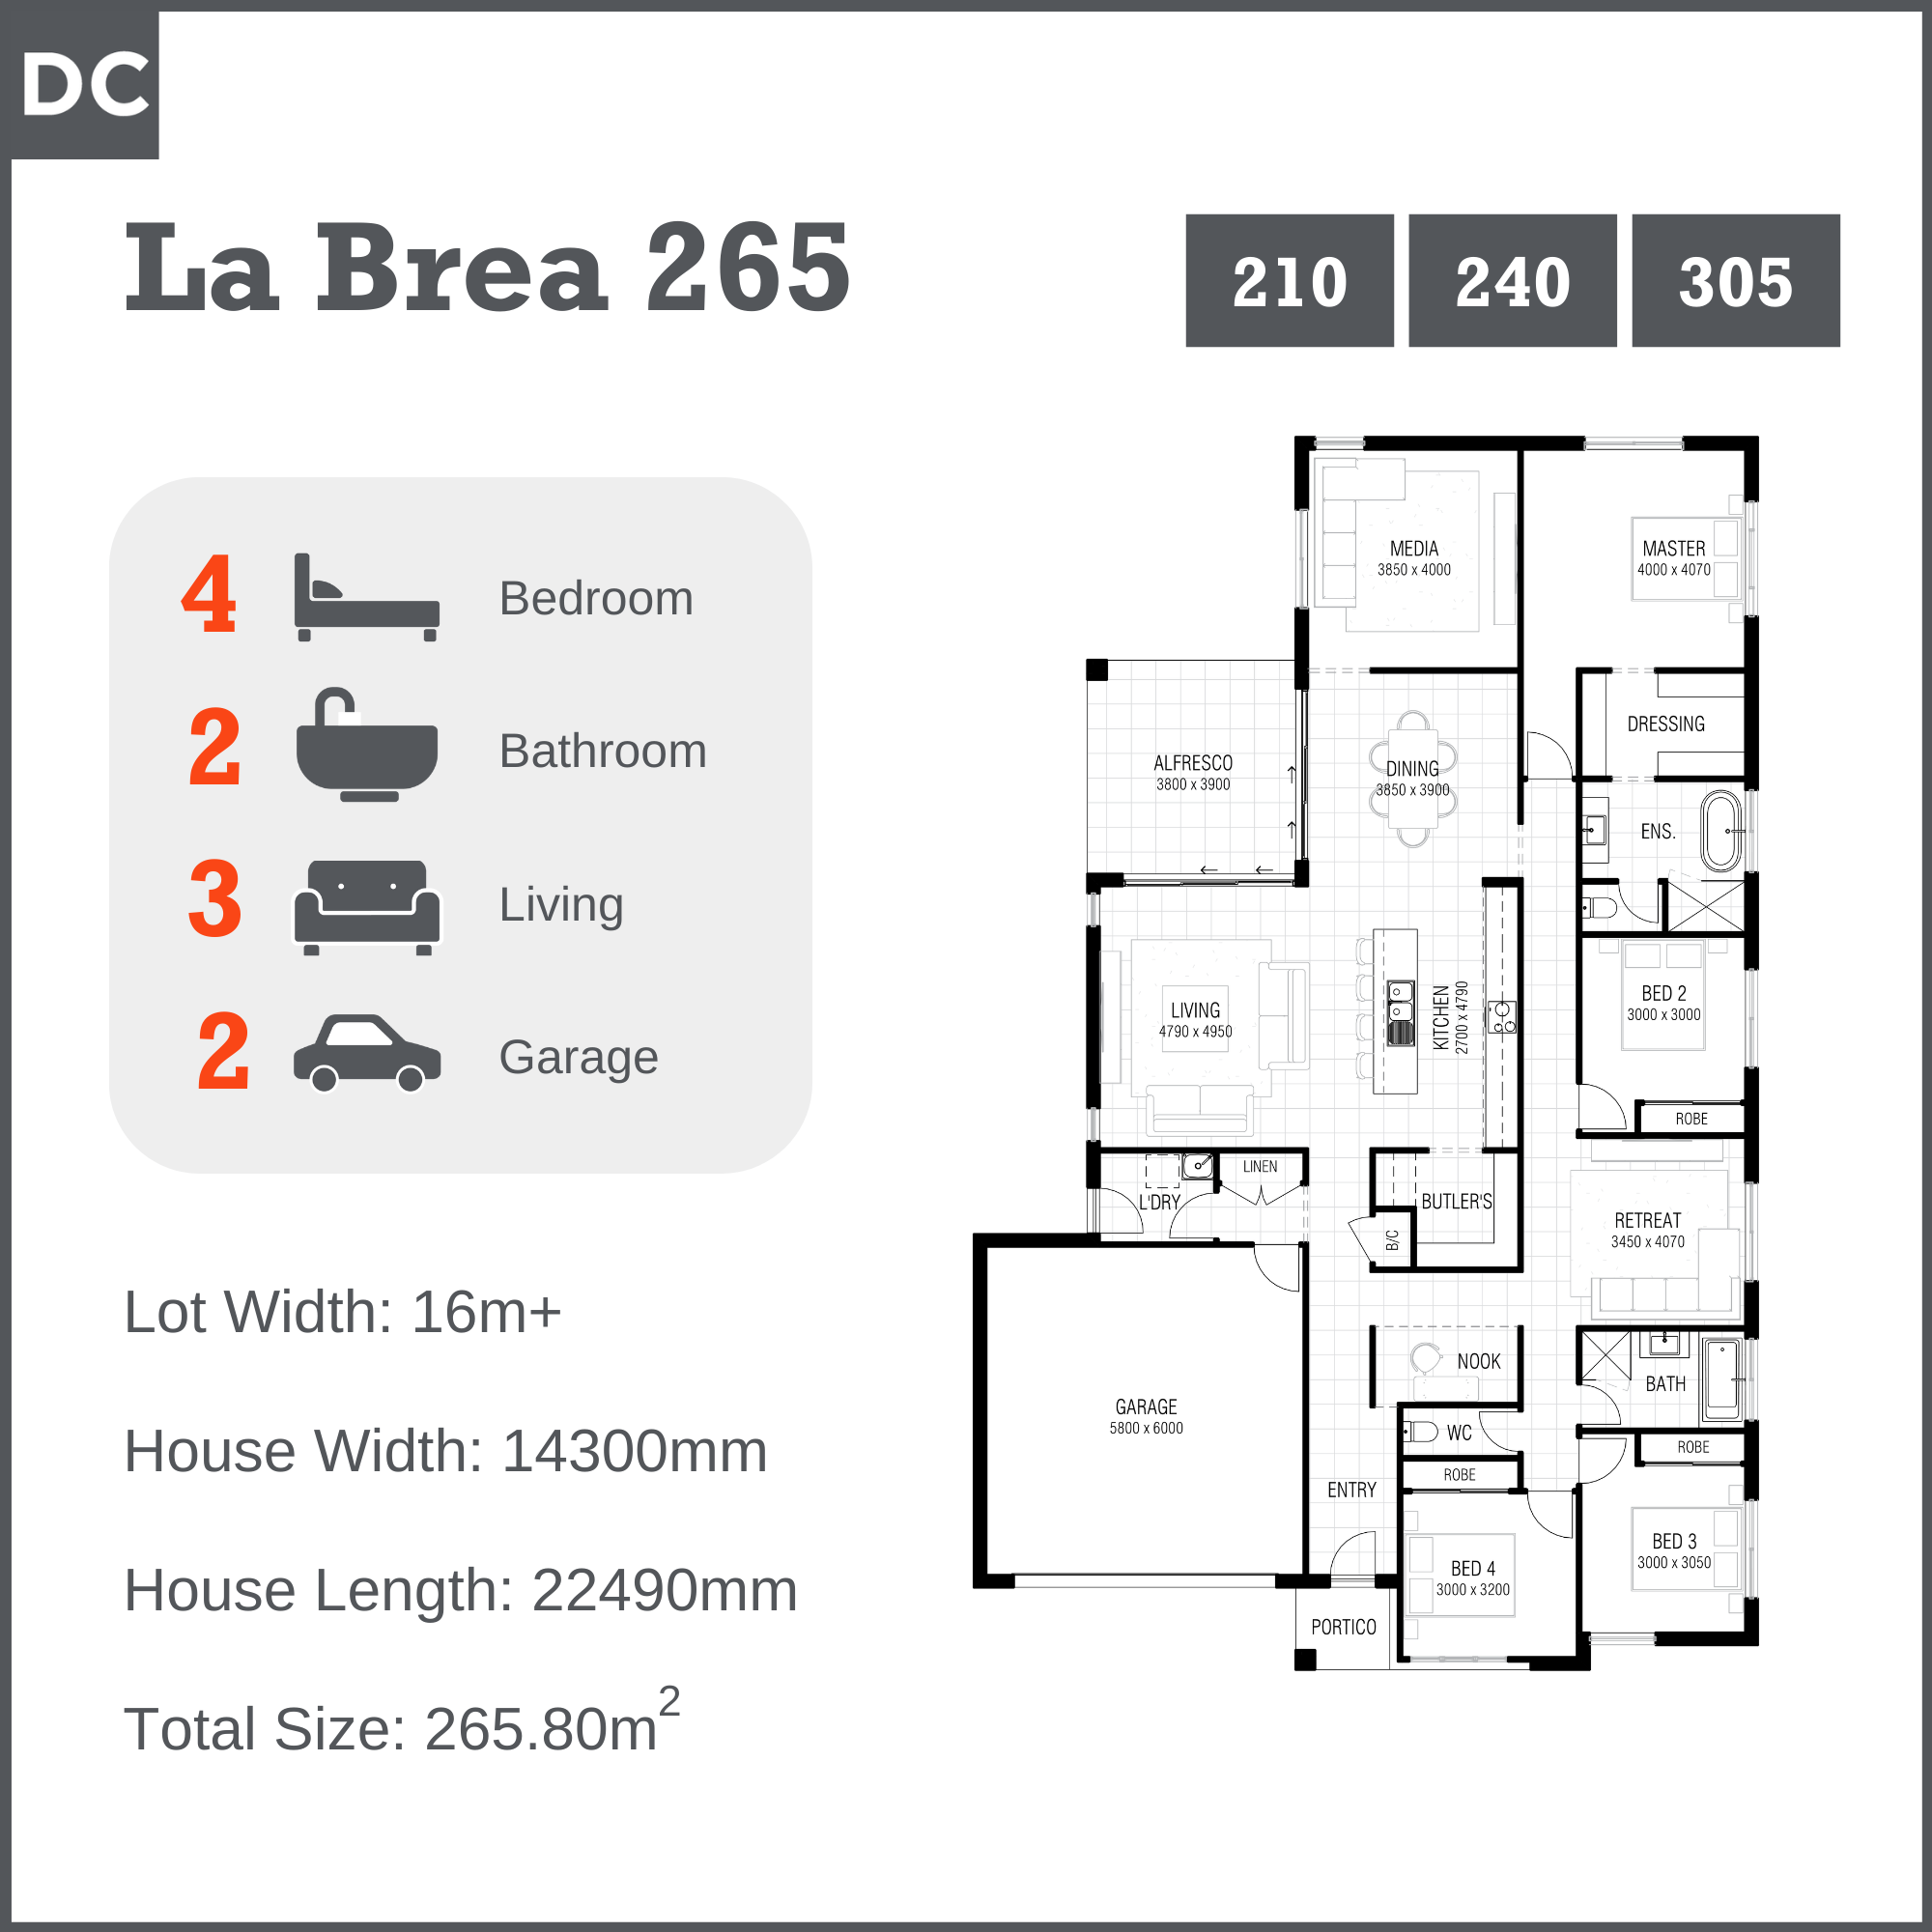 La Brea 265 Home Design - DC Living Range